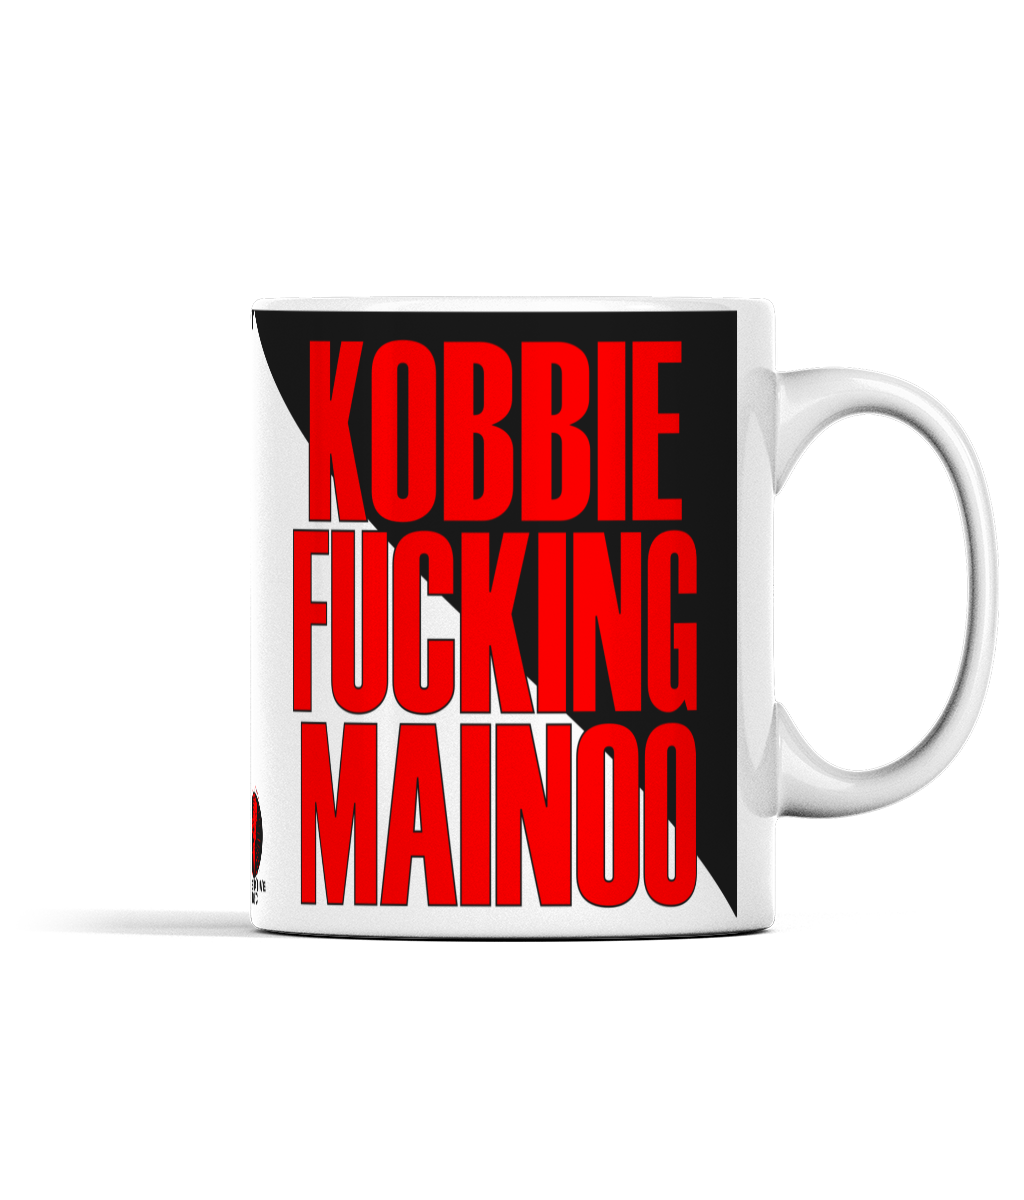 Kobbie Fucking Mainoo - Alternative Mug